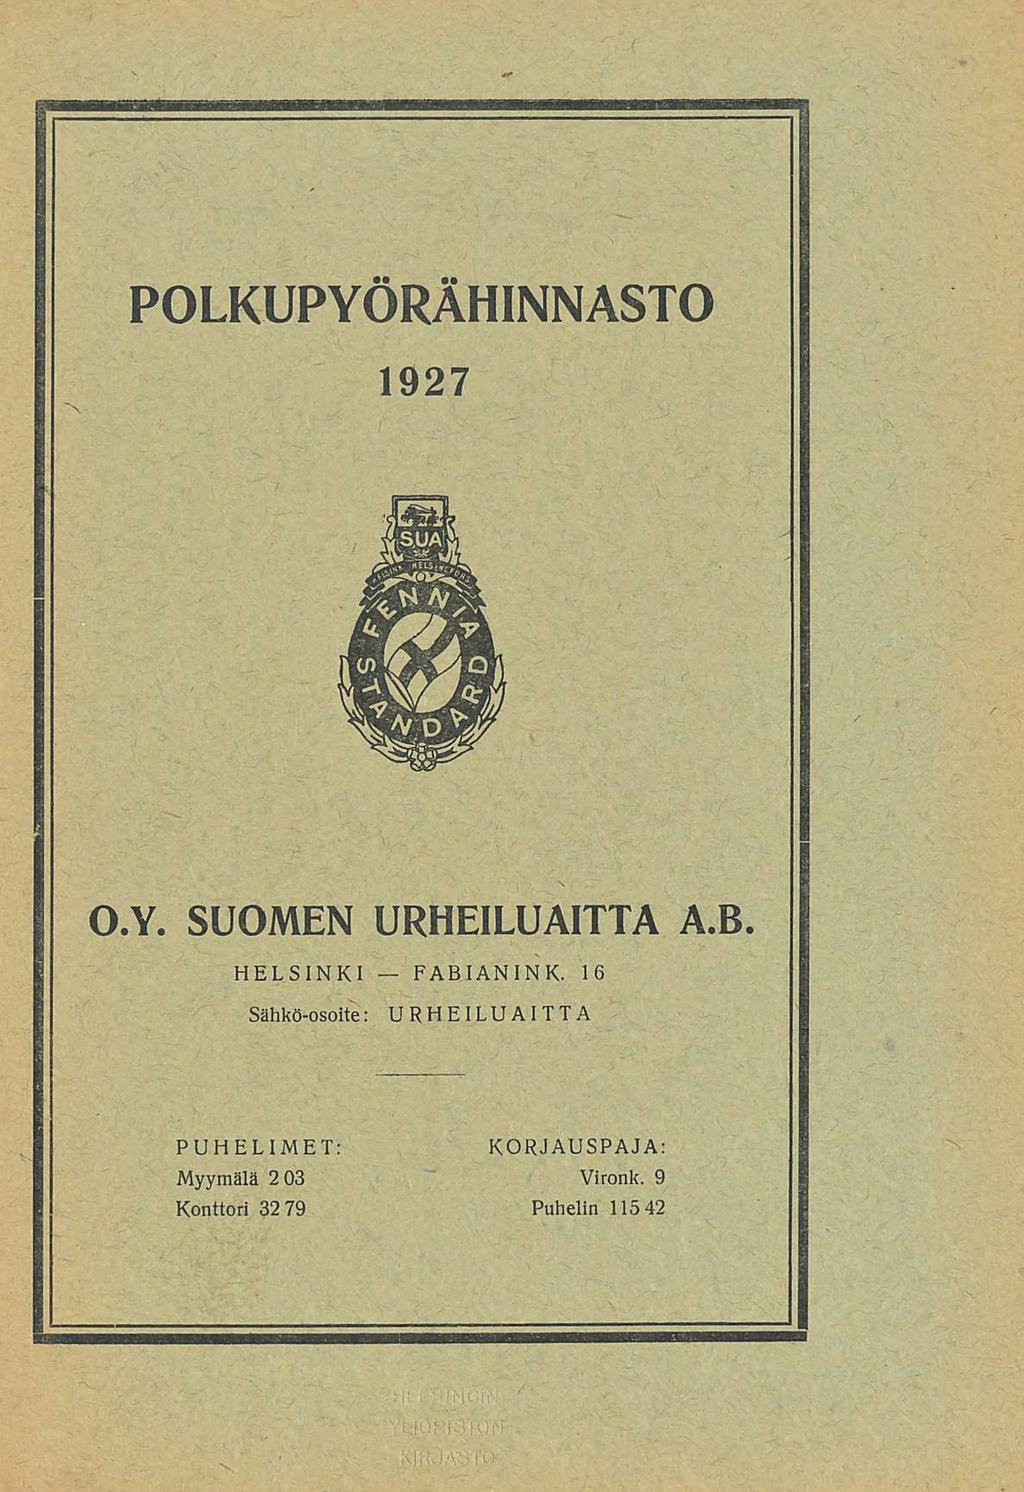 POLKUPYÖRÄHINNASTO1927. 1927 O.Y. SUOMEN URHEILUAITTA A.B. HELSINKI FAB län IN K.